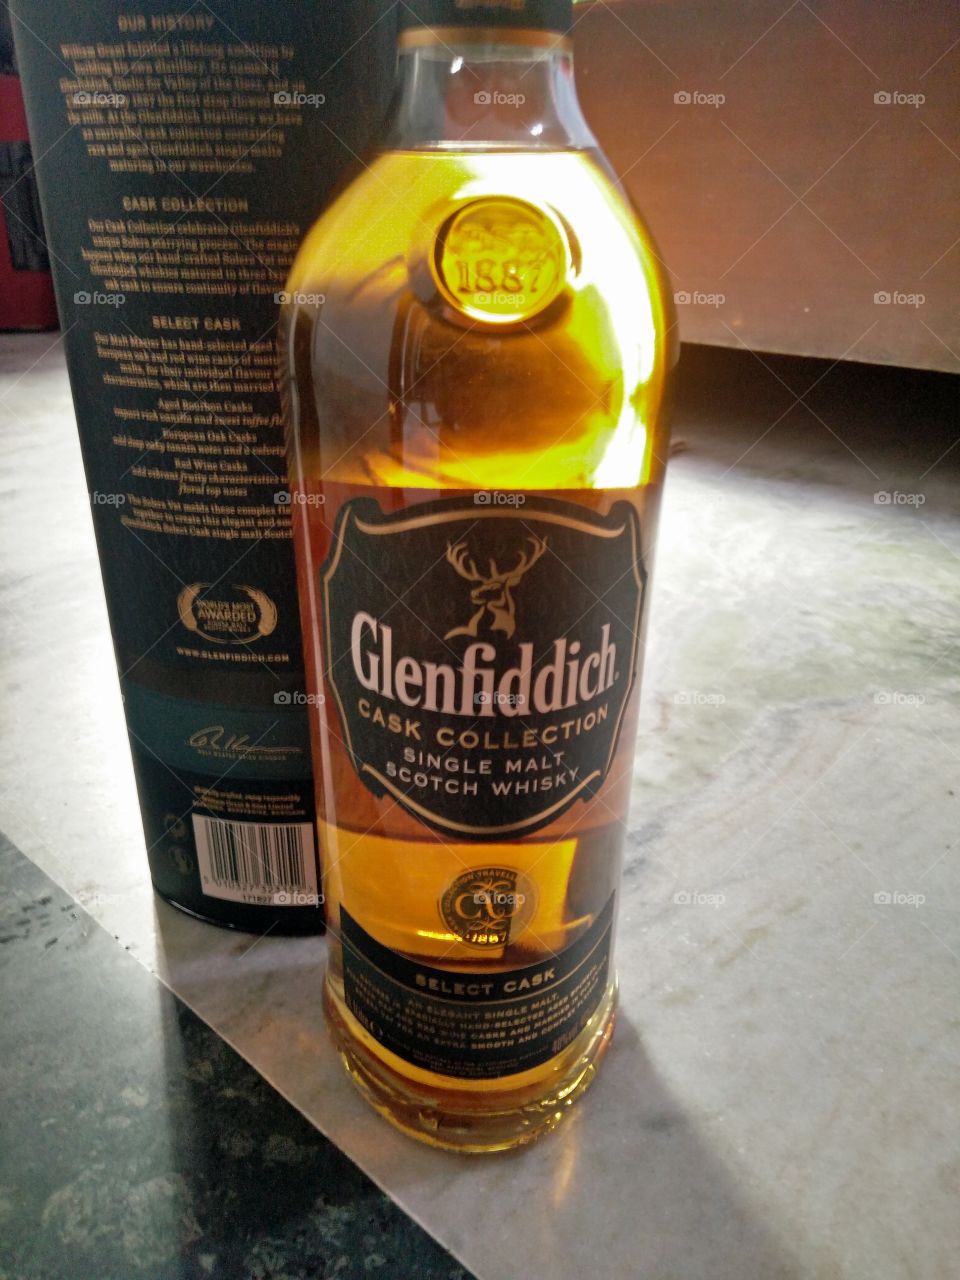 # Glenfiddich #whisky# alcohol# singlemalt# taste# smoothness